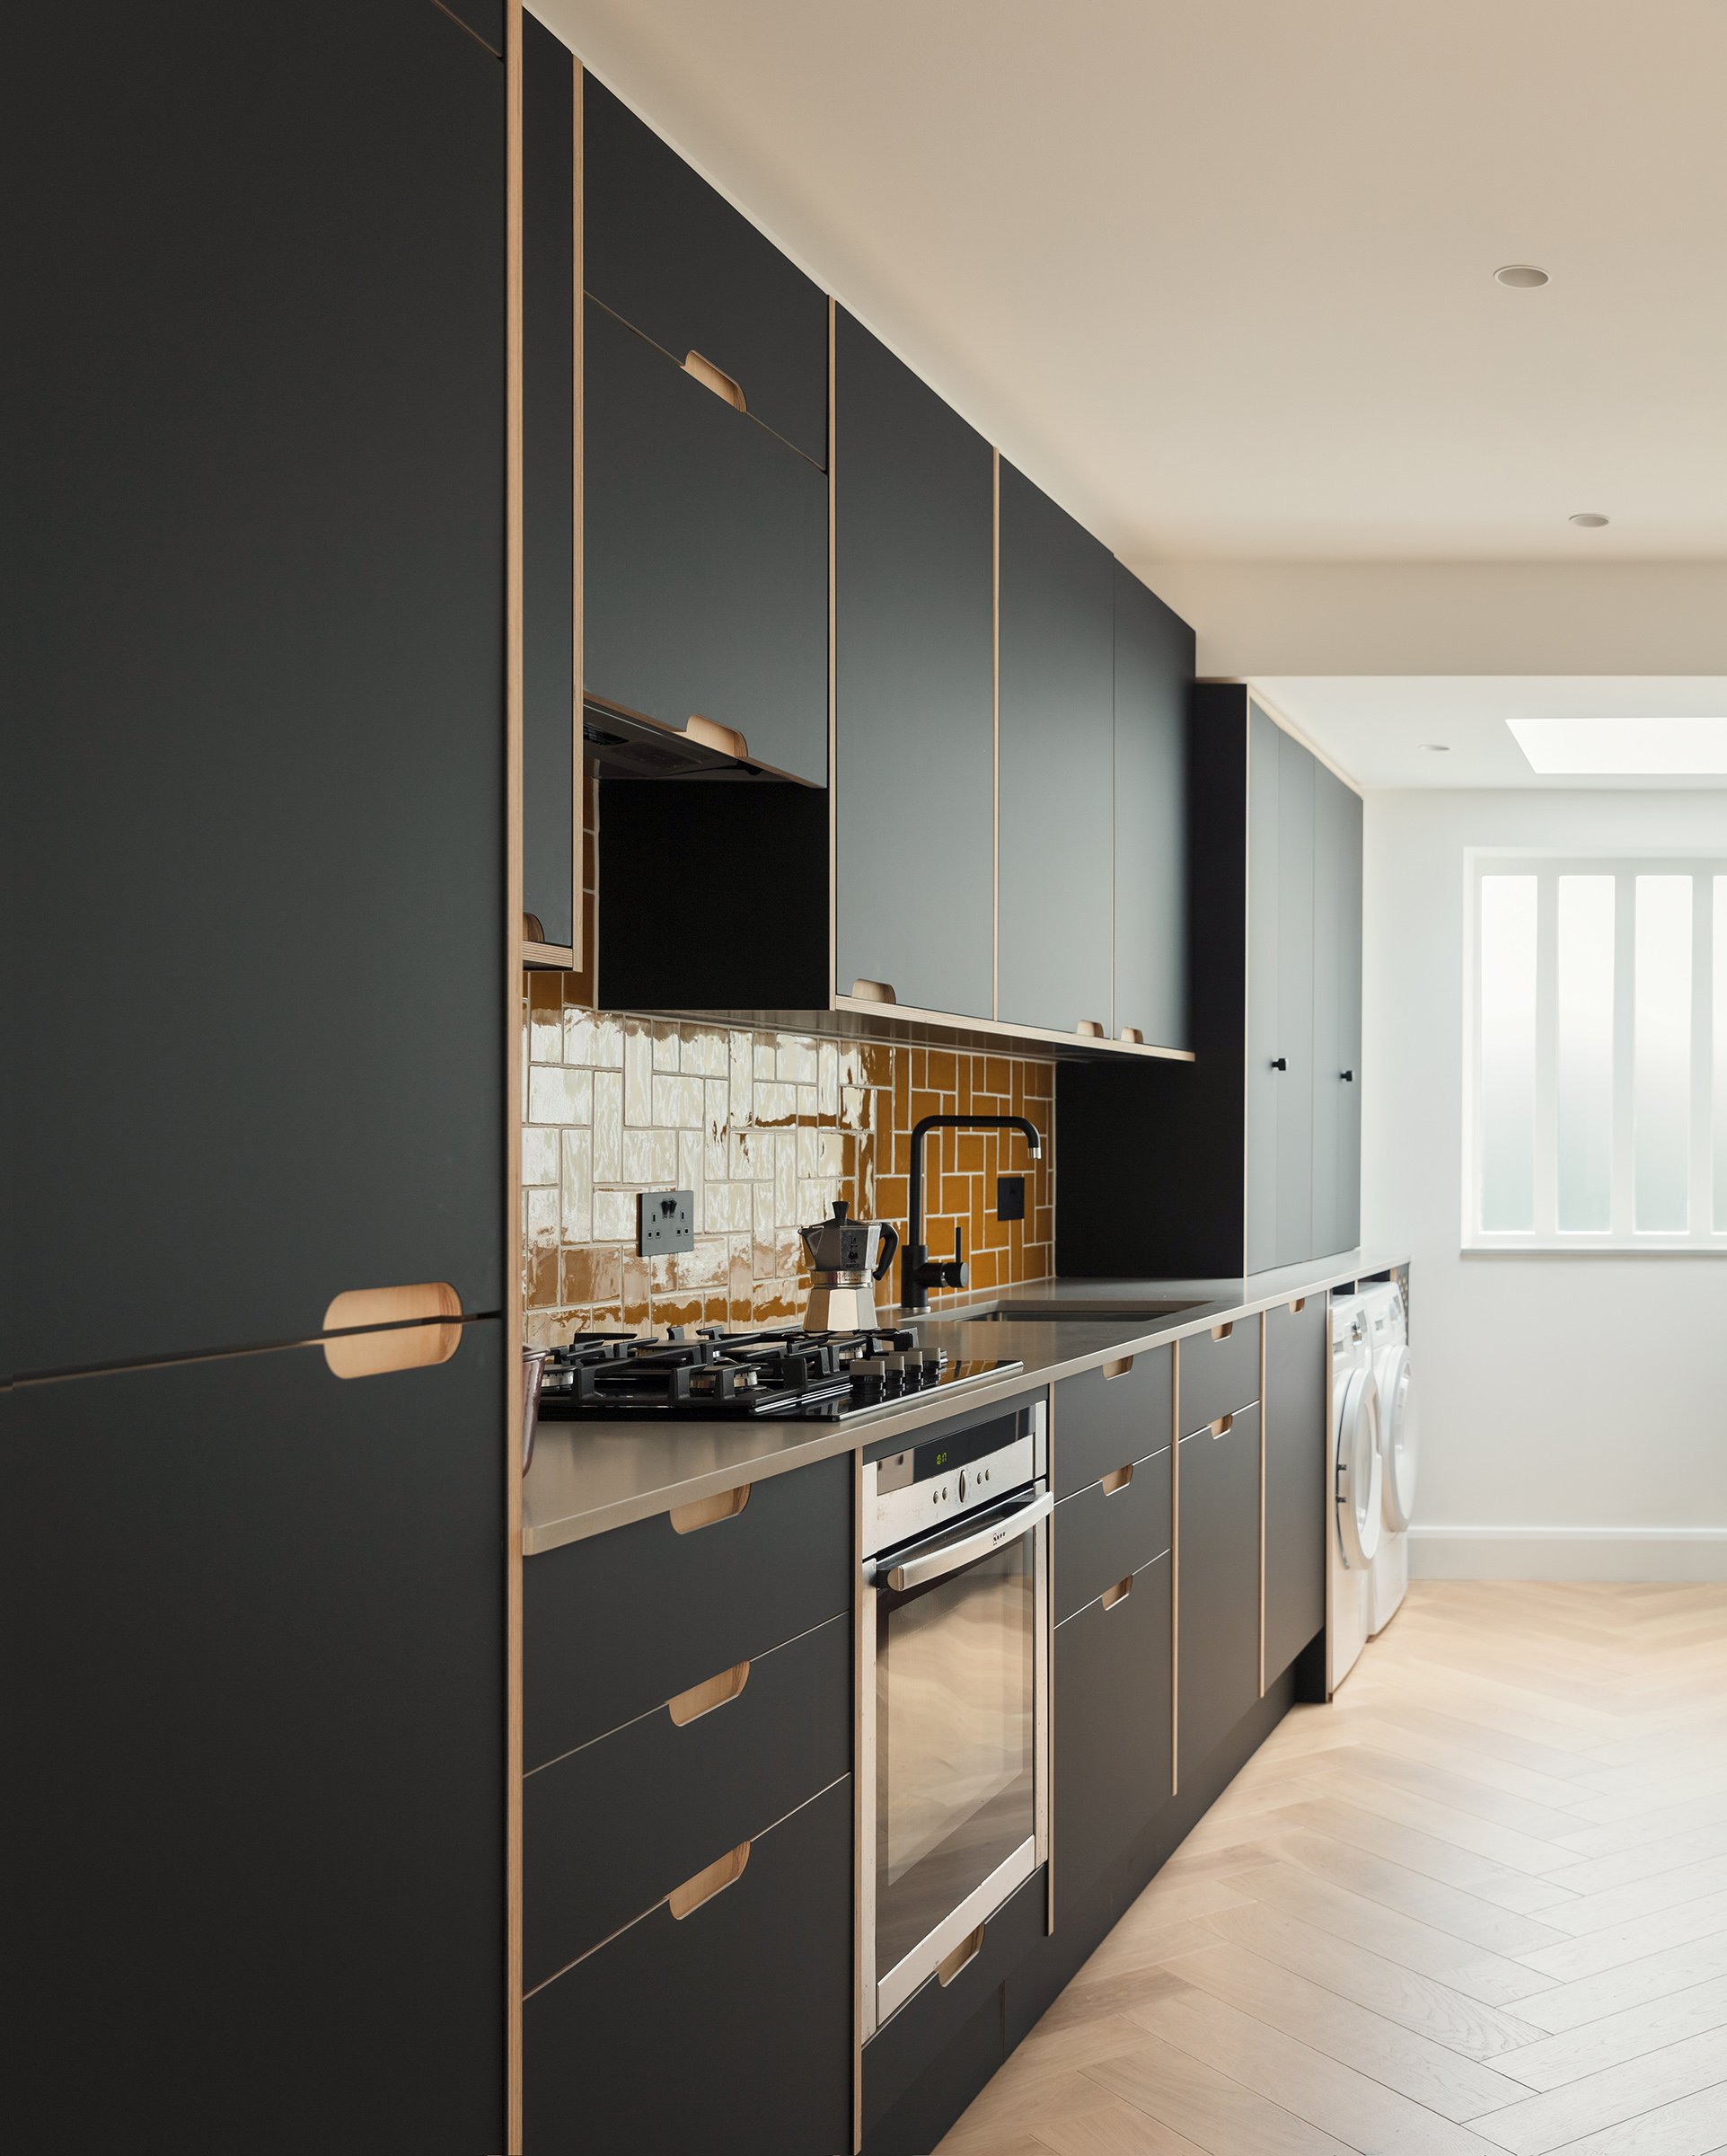 4-dulwich-bungalow-house-kitchen-interior-design-architecture-london-uk-rider-stirland-architects.jpg